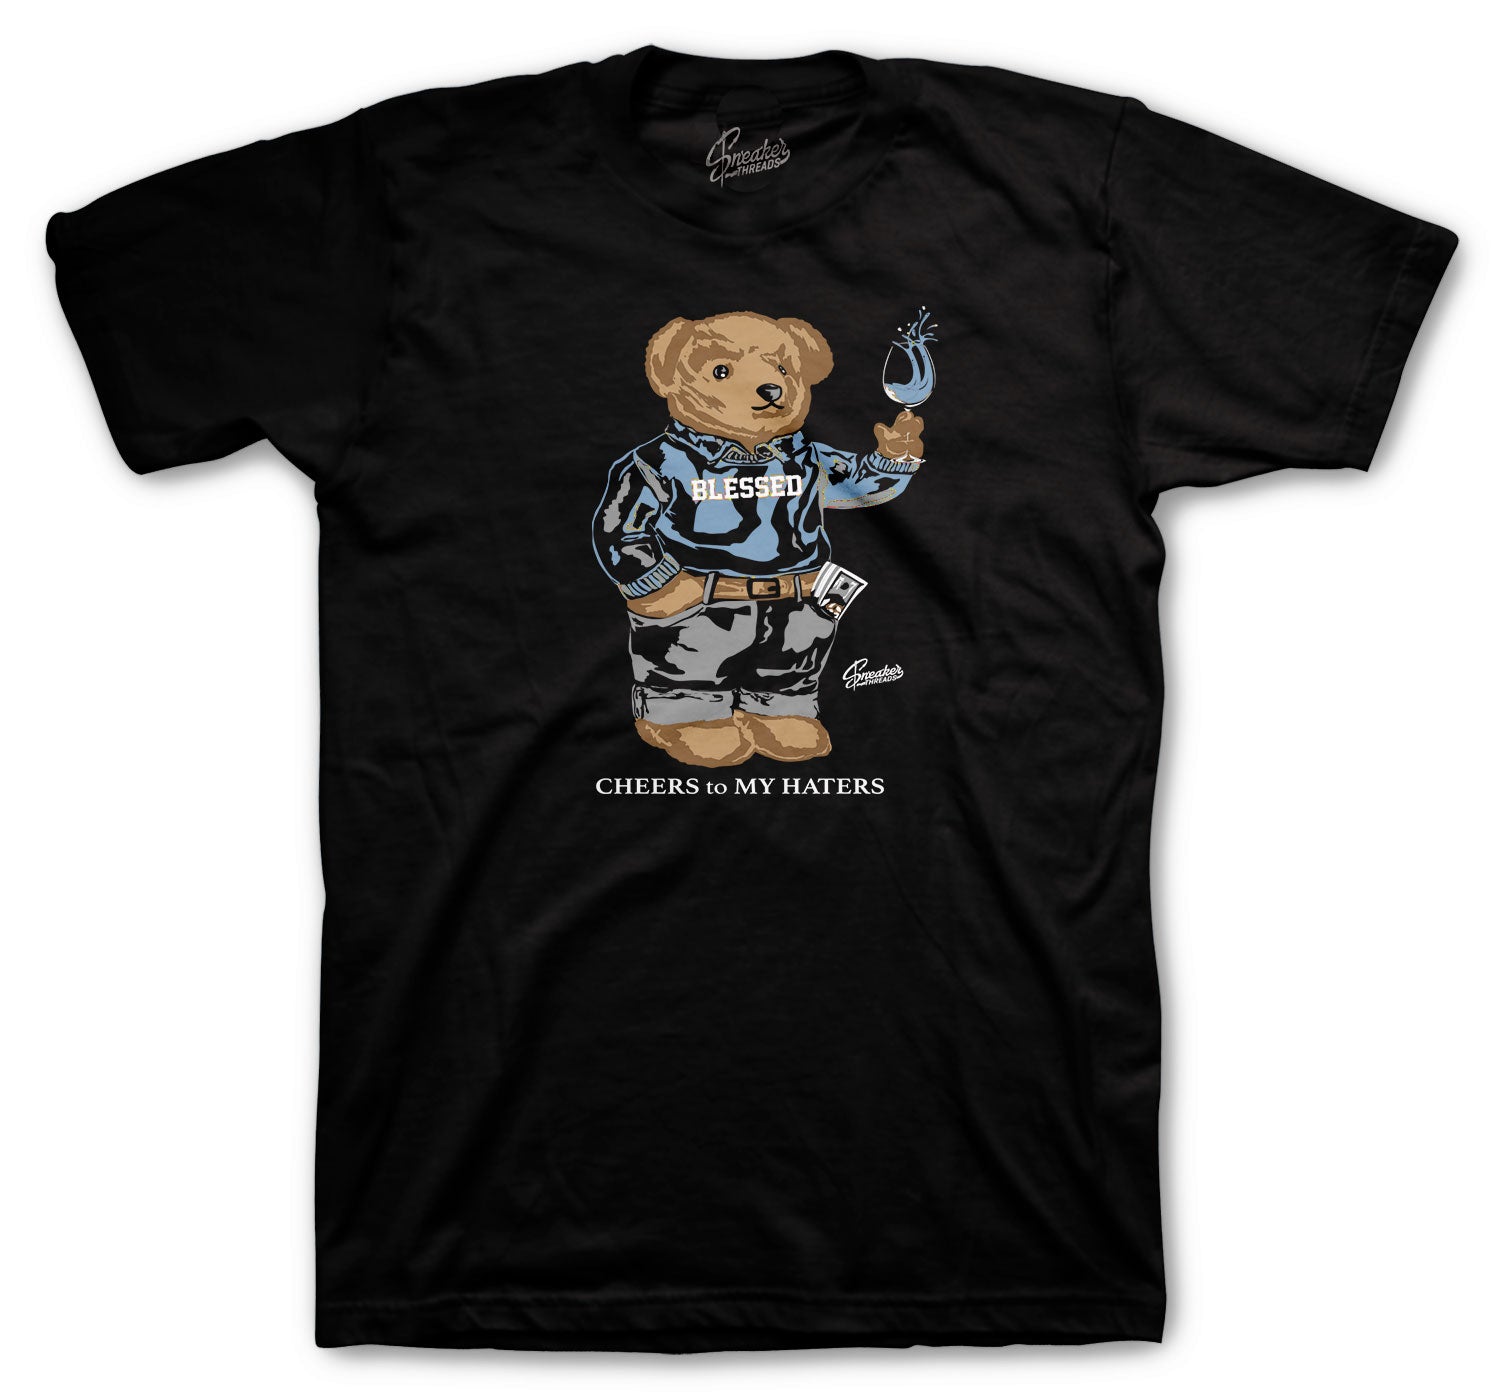 Retro 5 Bluebird Shirt - Cheers Bear - Black